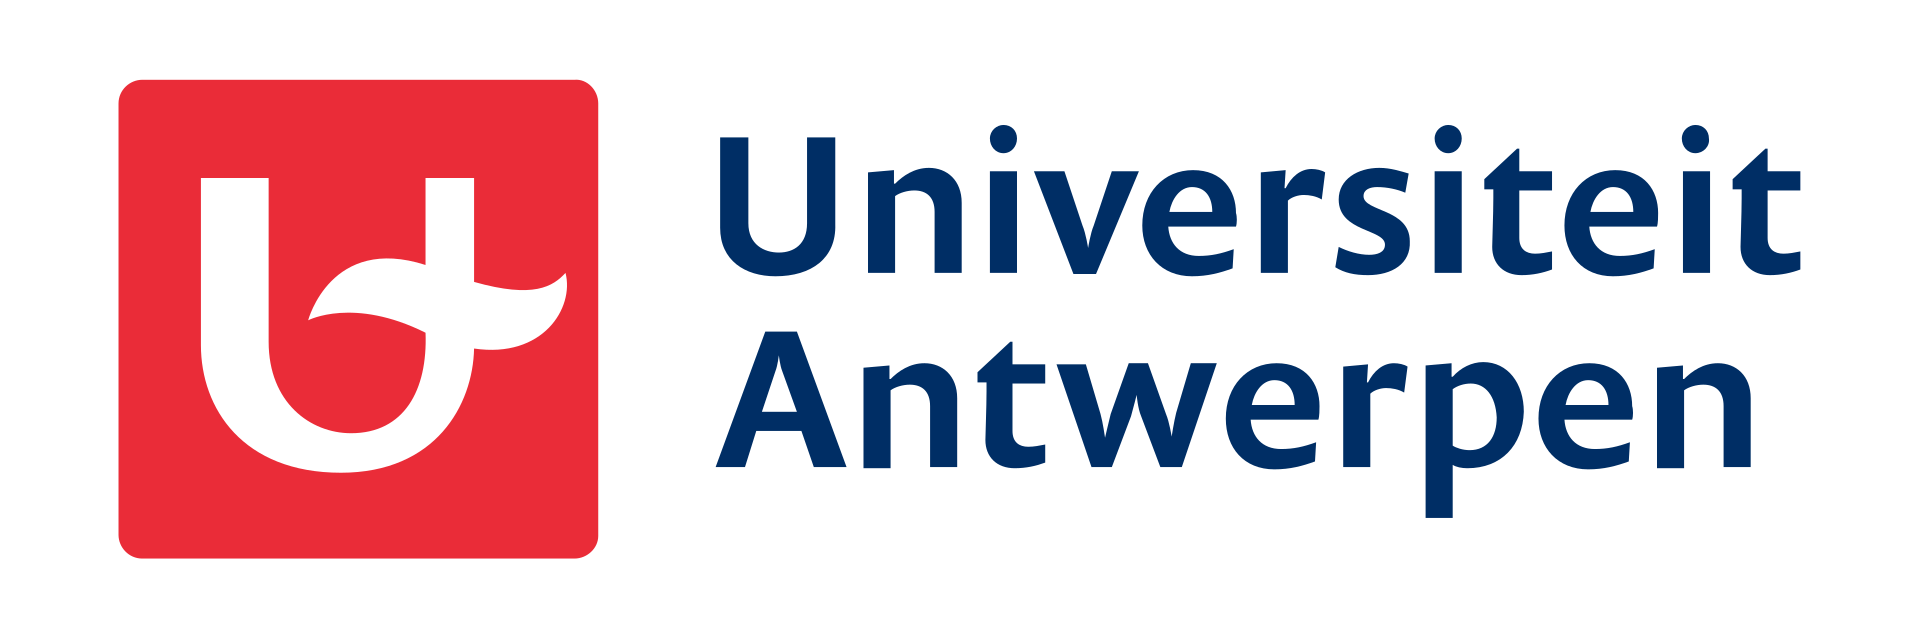 Universitaire Te Antwerpen - University of Antwerp - Антверпенский университет - Университет Антверпена